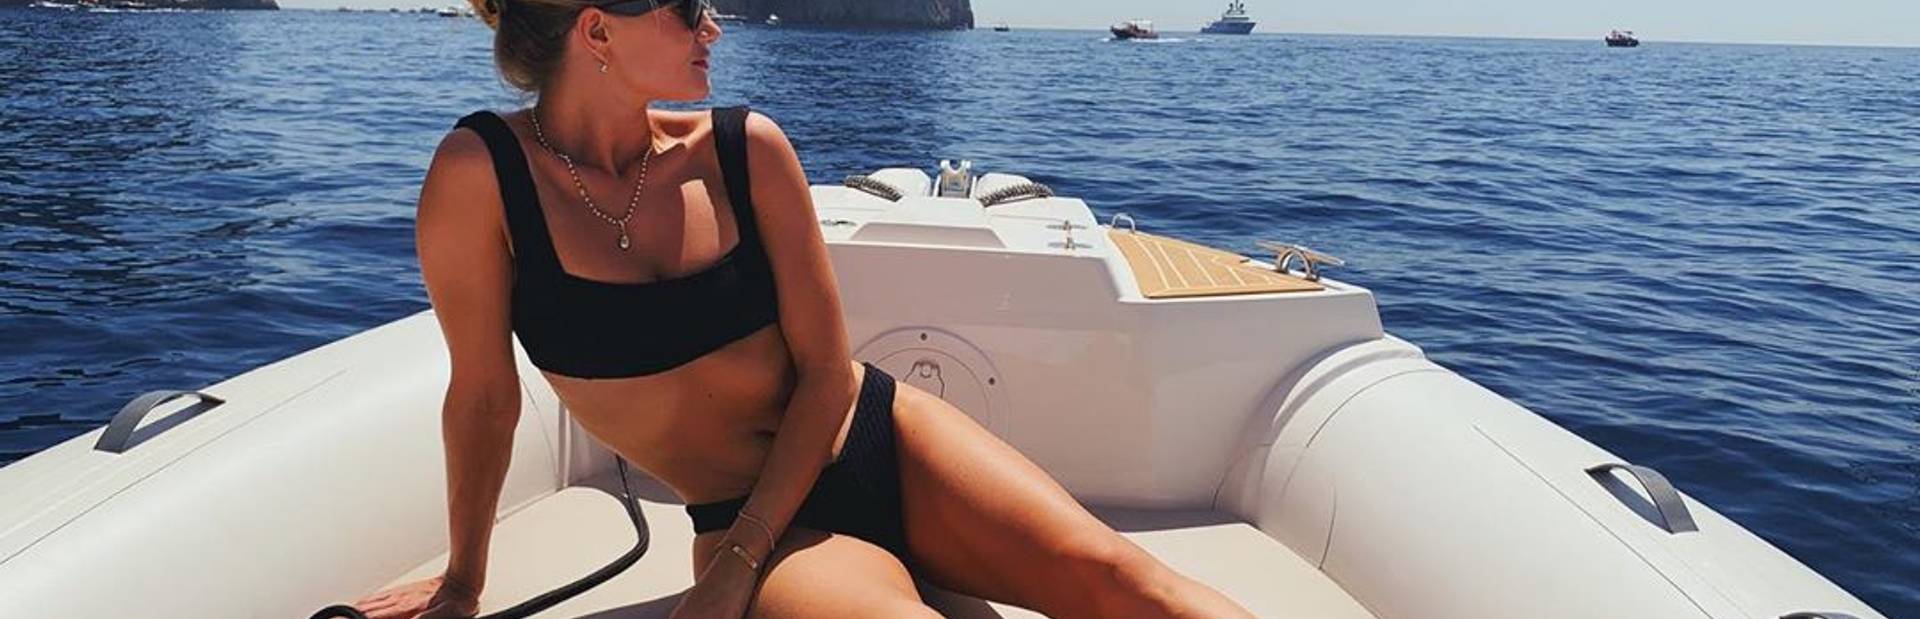 Supermodel style: How to do your Amalfi Coast yacht charter like Rosie Huntington-Whiteley